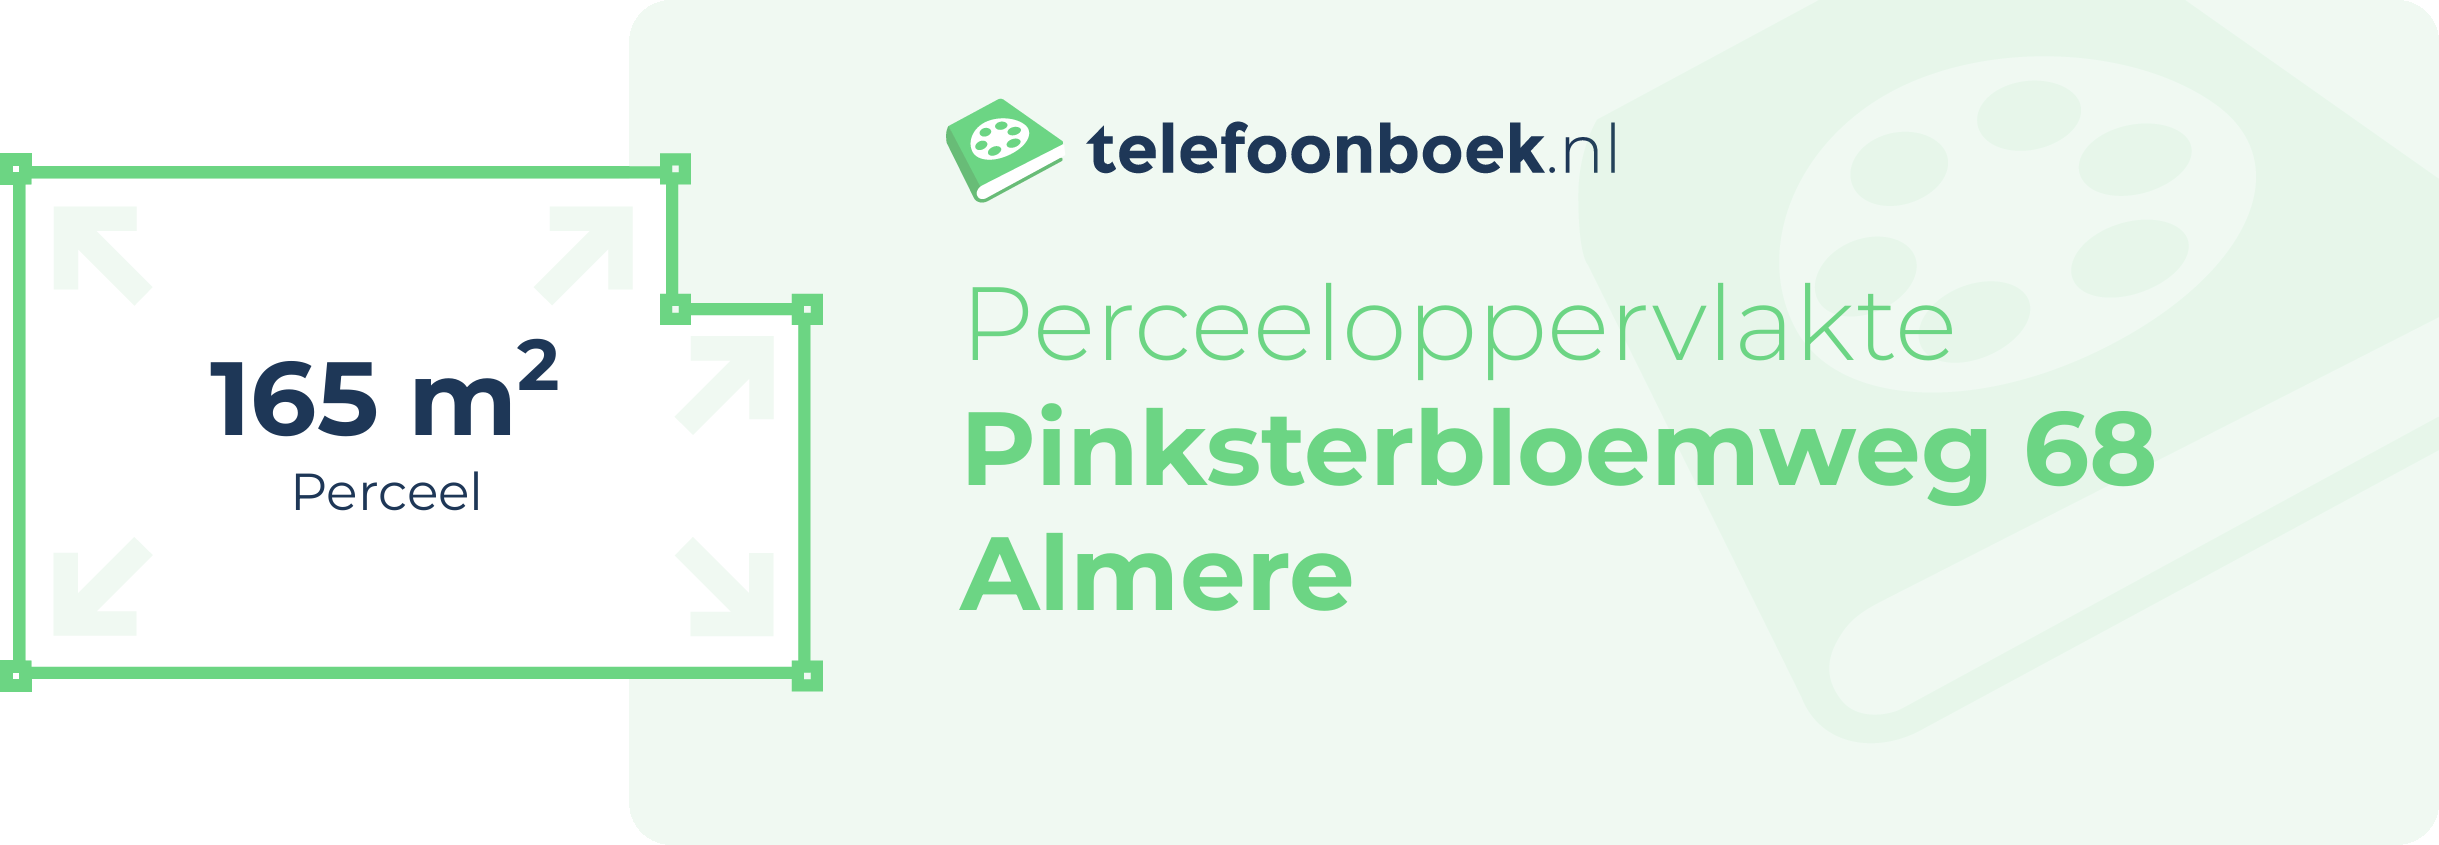 Perceeloppervlakte Pinksterbloemweg 68 Almere